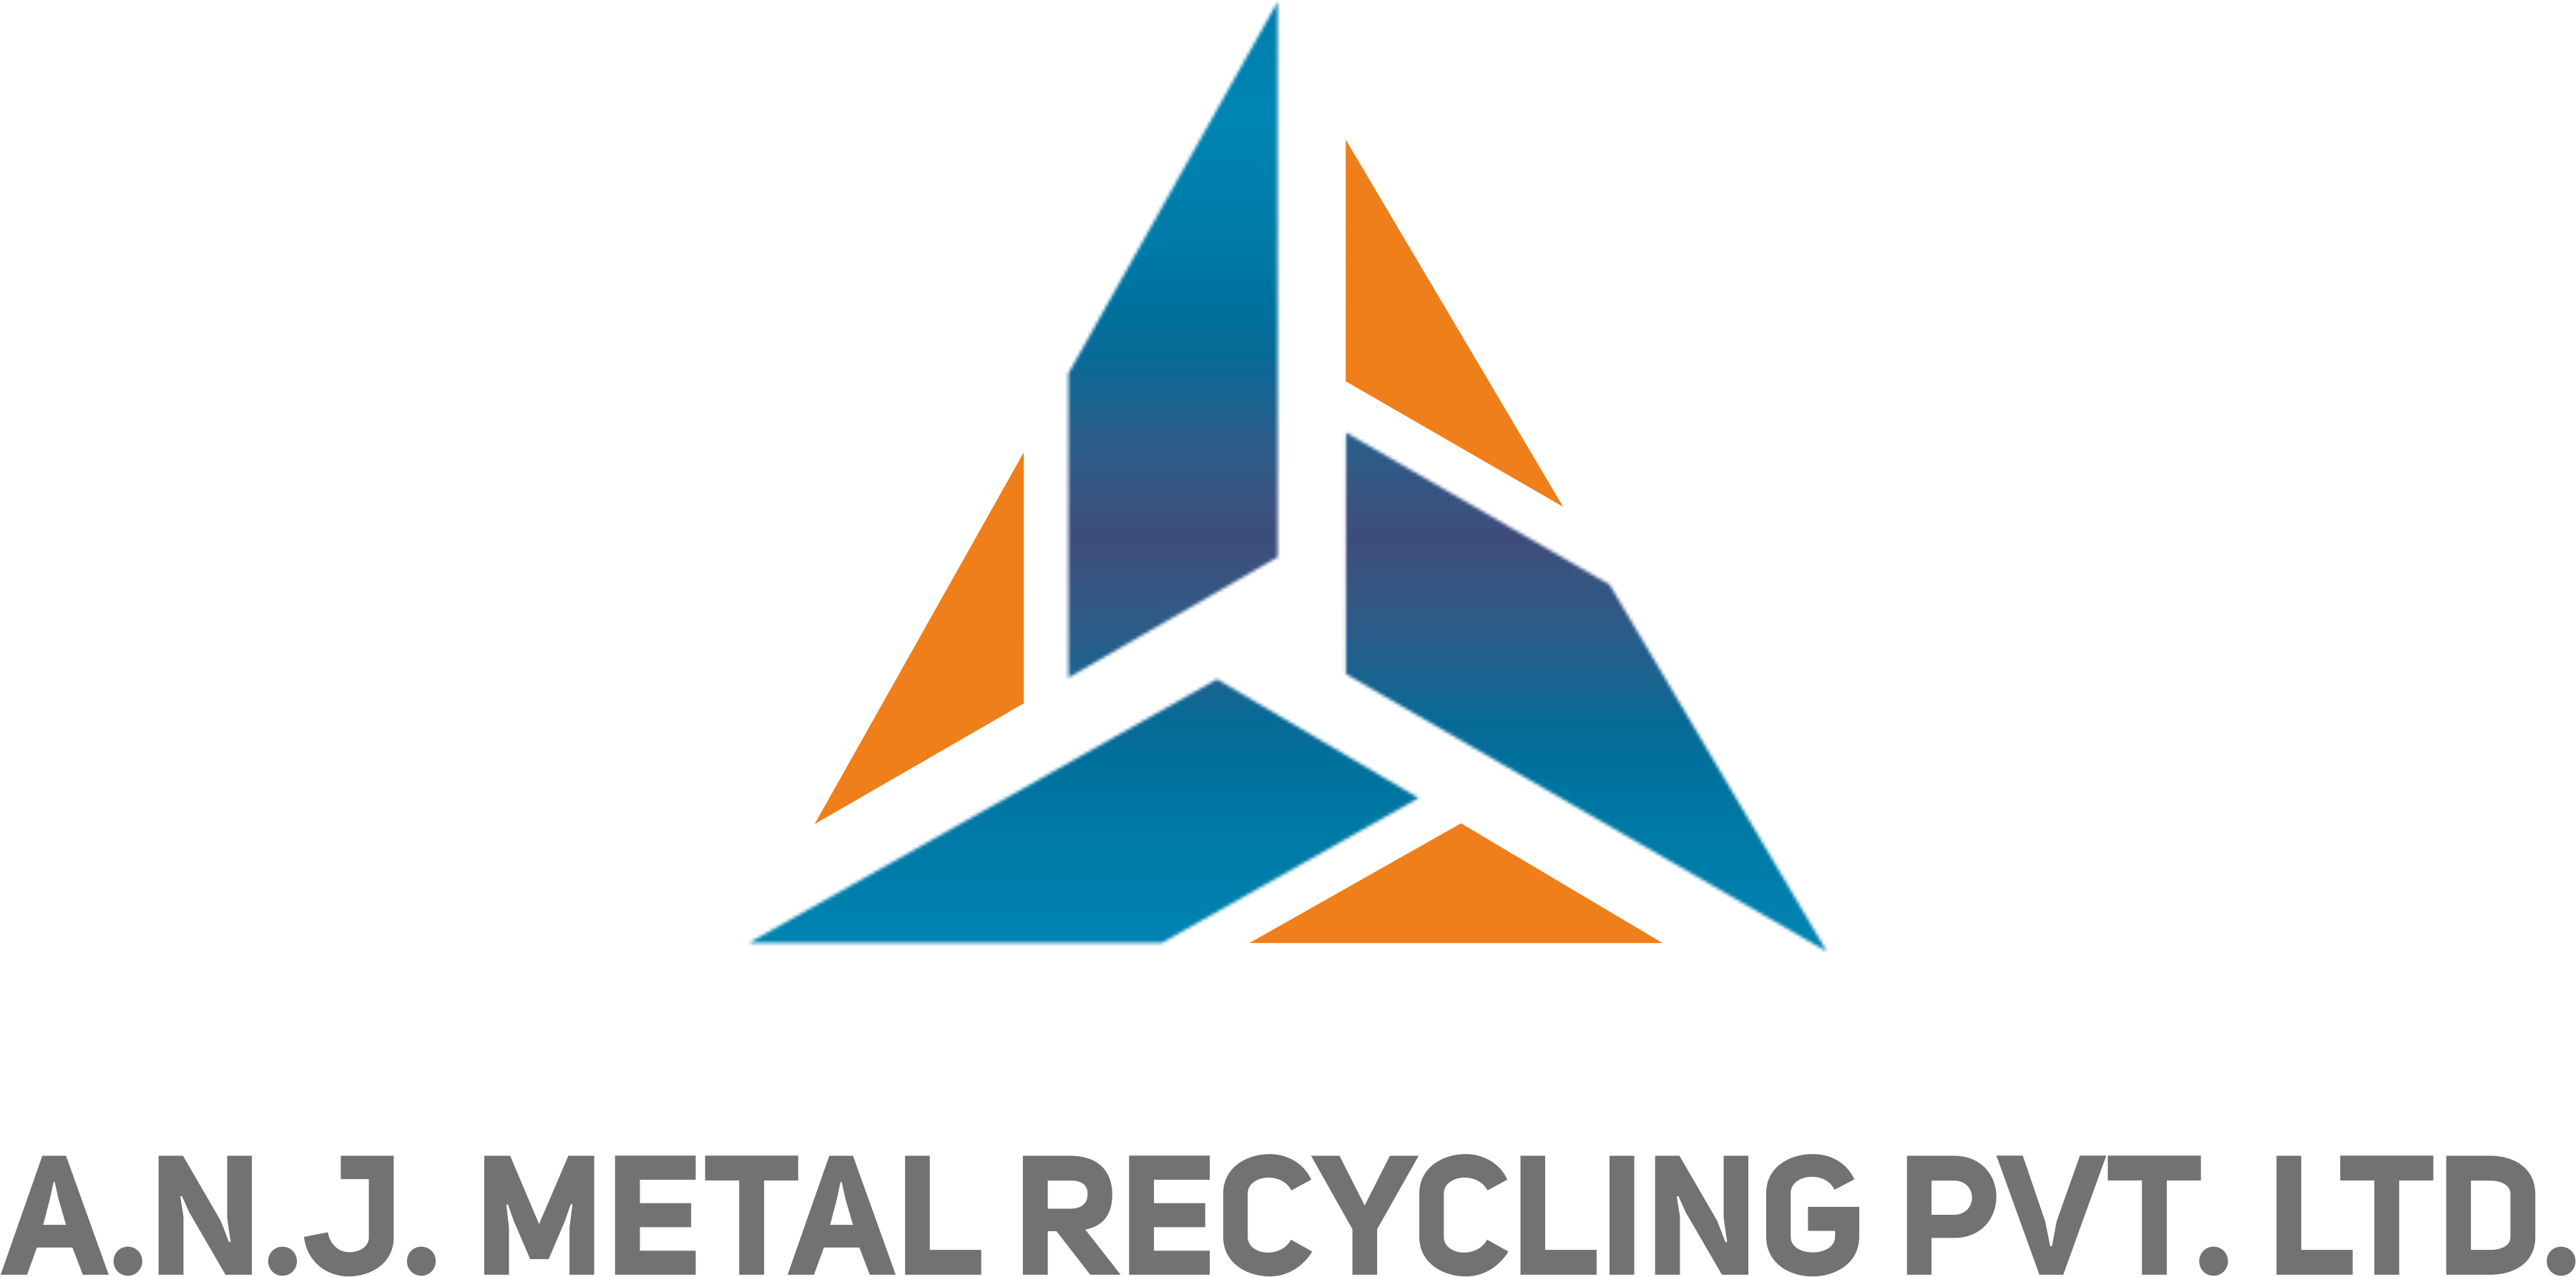 A.N.J. Metal Recycling Pvt. Ltd.